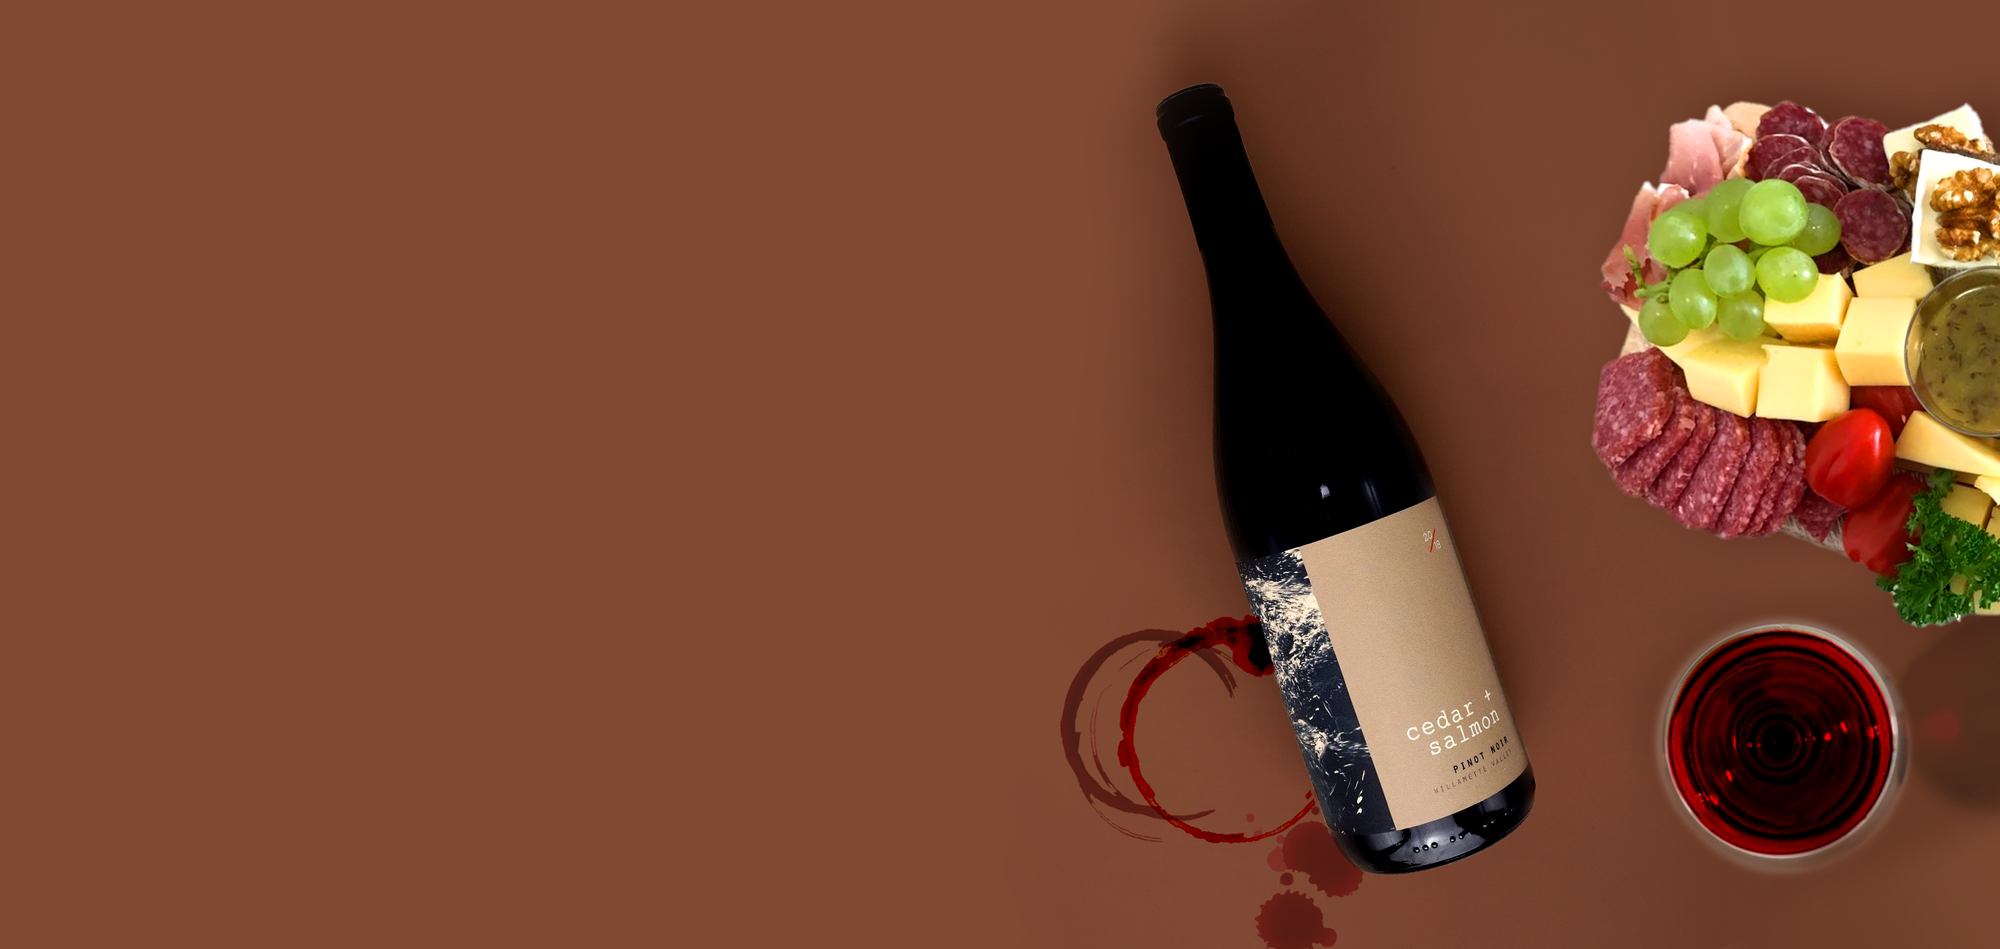 Cedar + Salmon Willamette Valley Pinot Noir